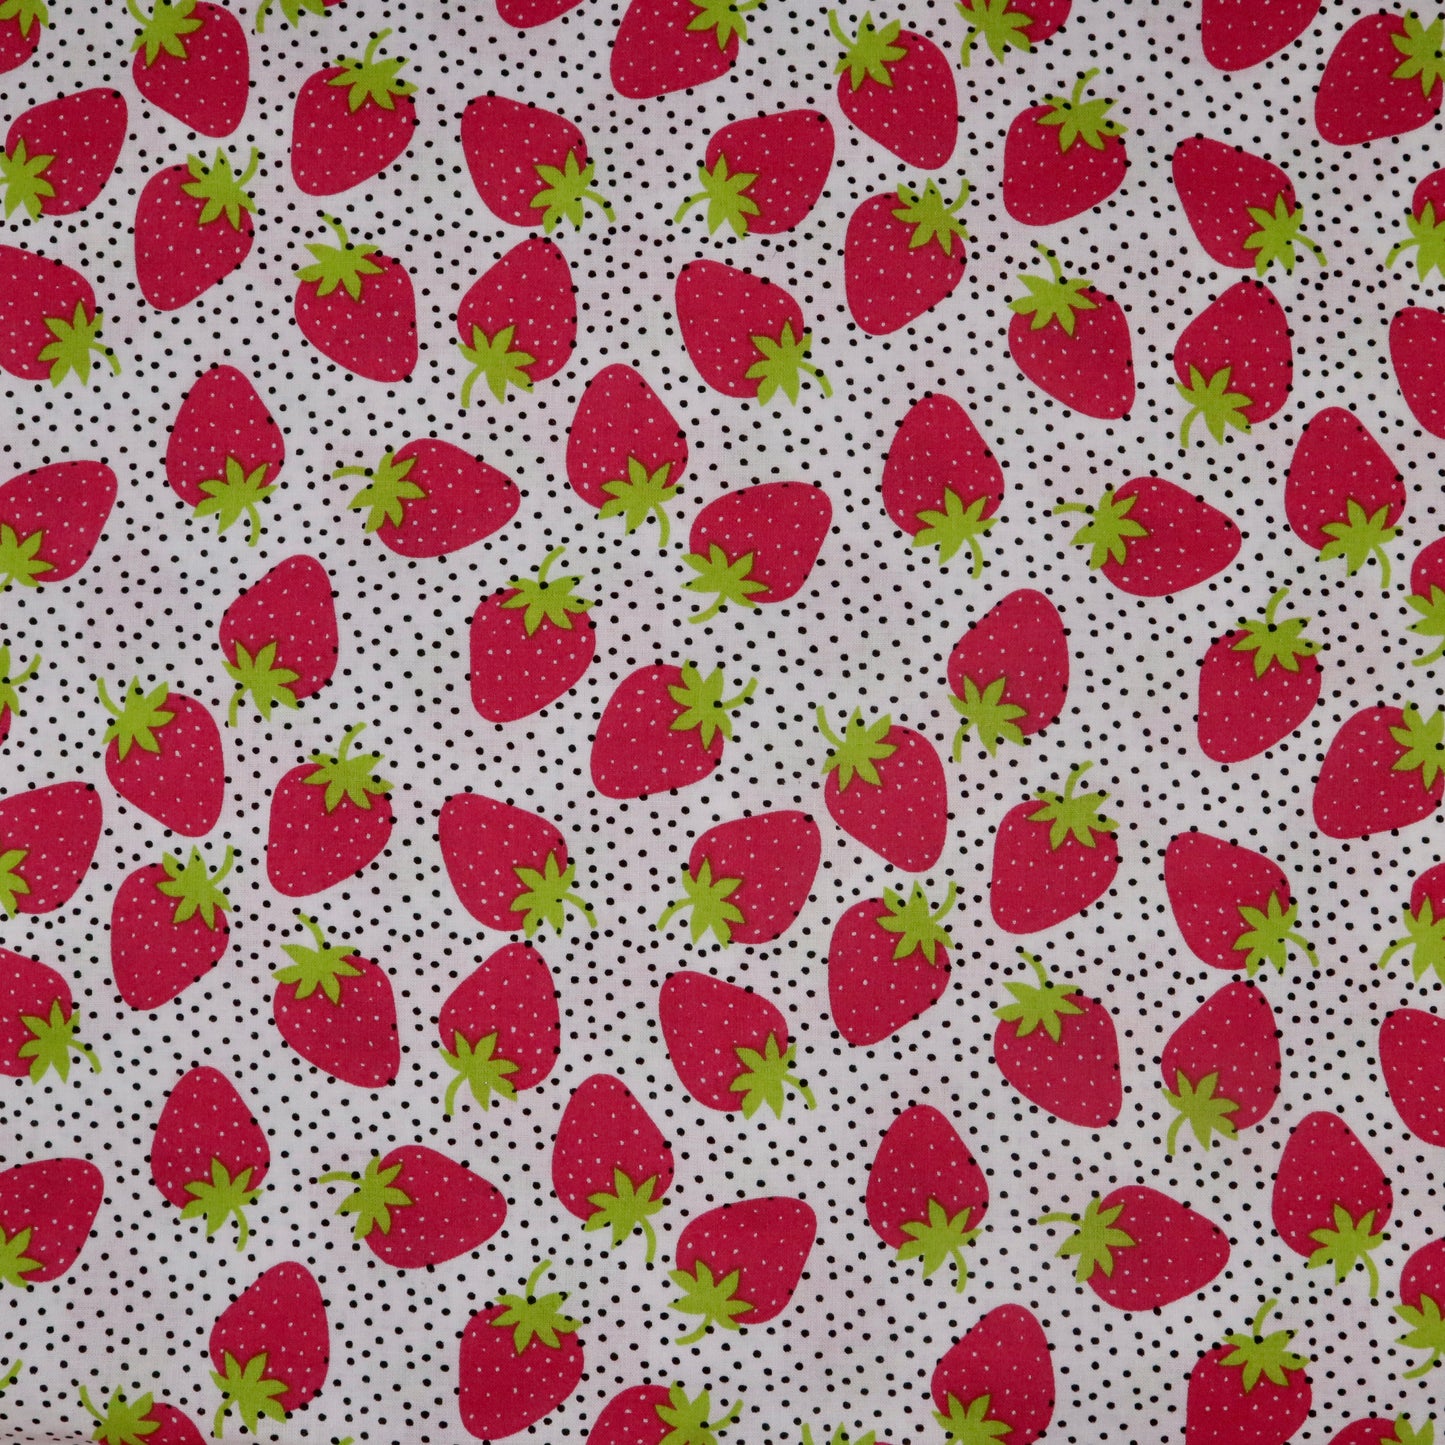 Strawberries - Quilting Cotton